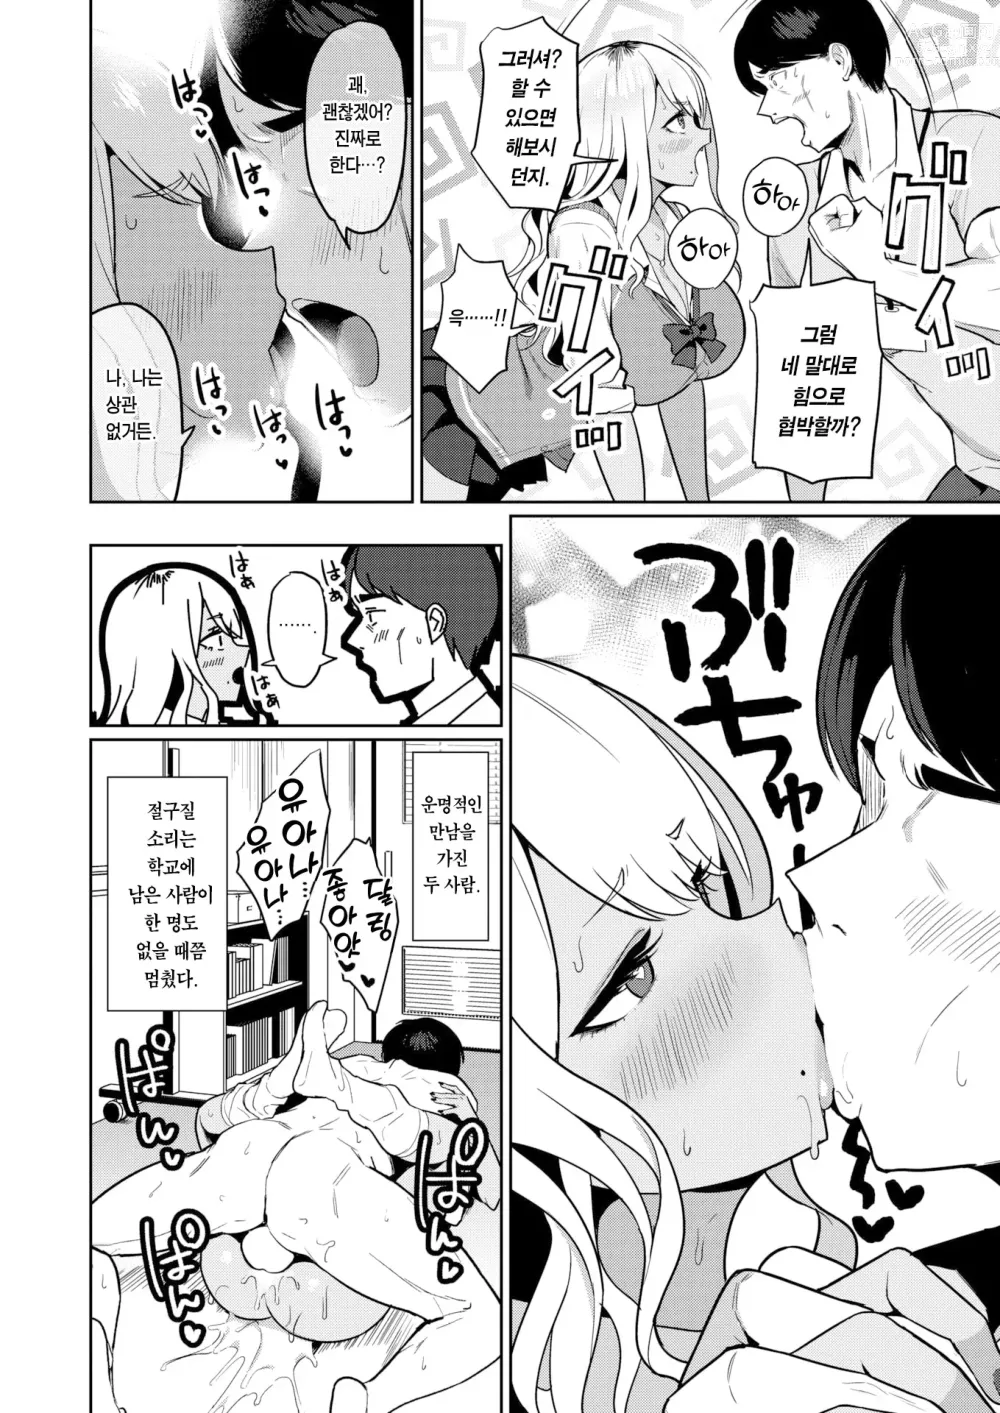 Page 9 of manga 선생님 완전 싫어!!